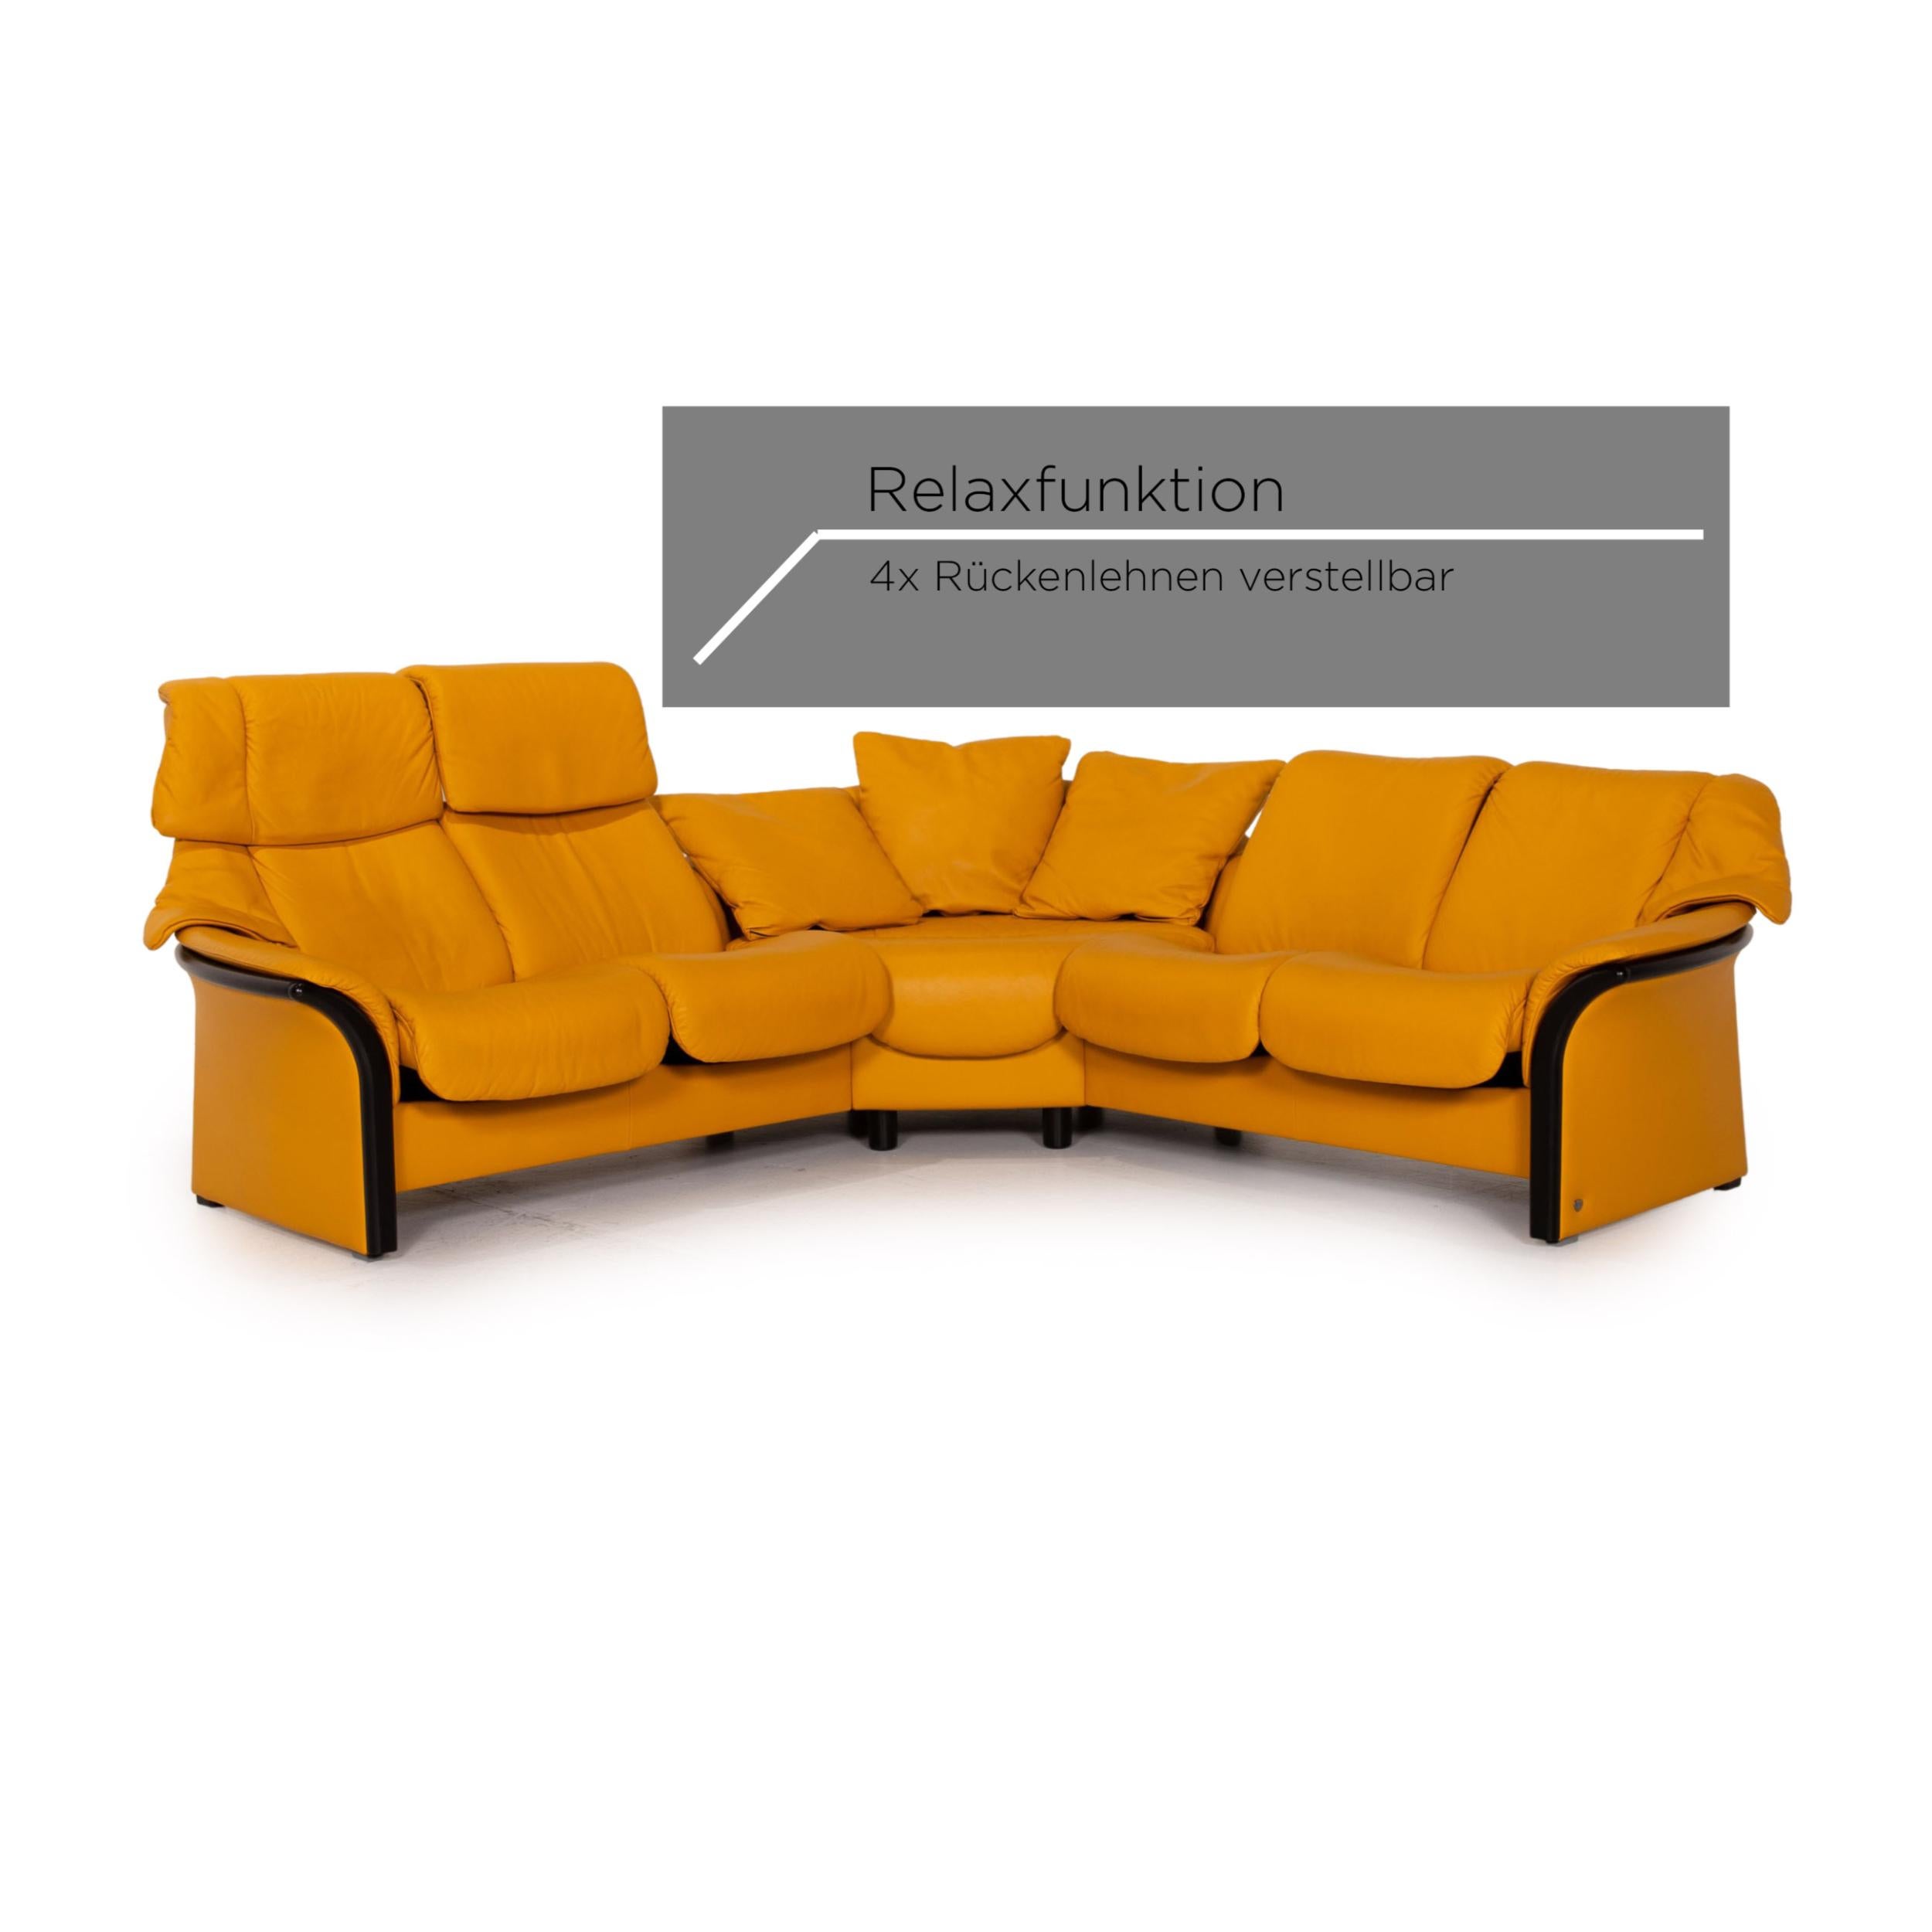 Modern Stressless Eldorado Leather Corner Sofa Yellow Relax Function Sofa Couch